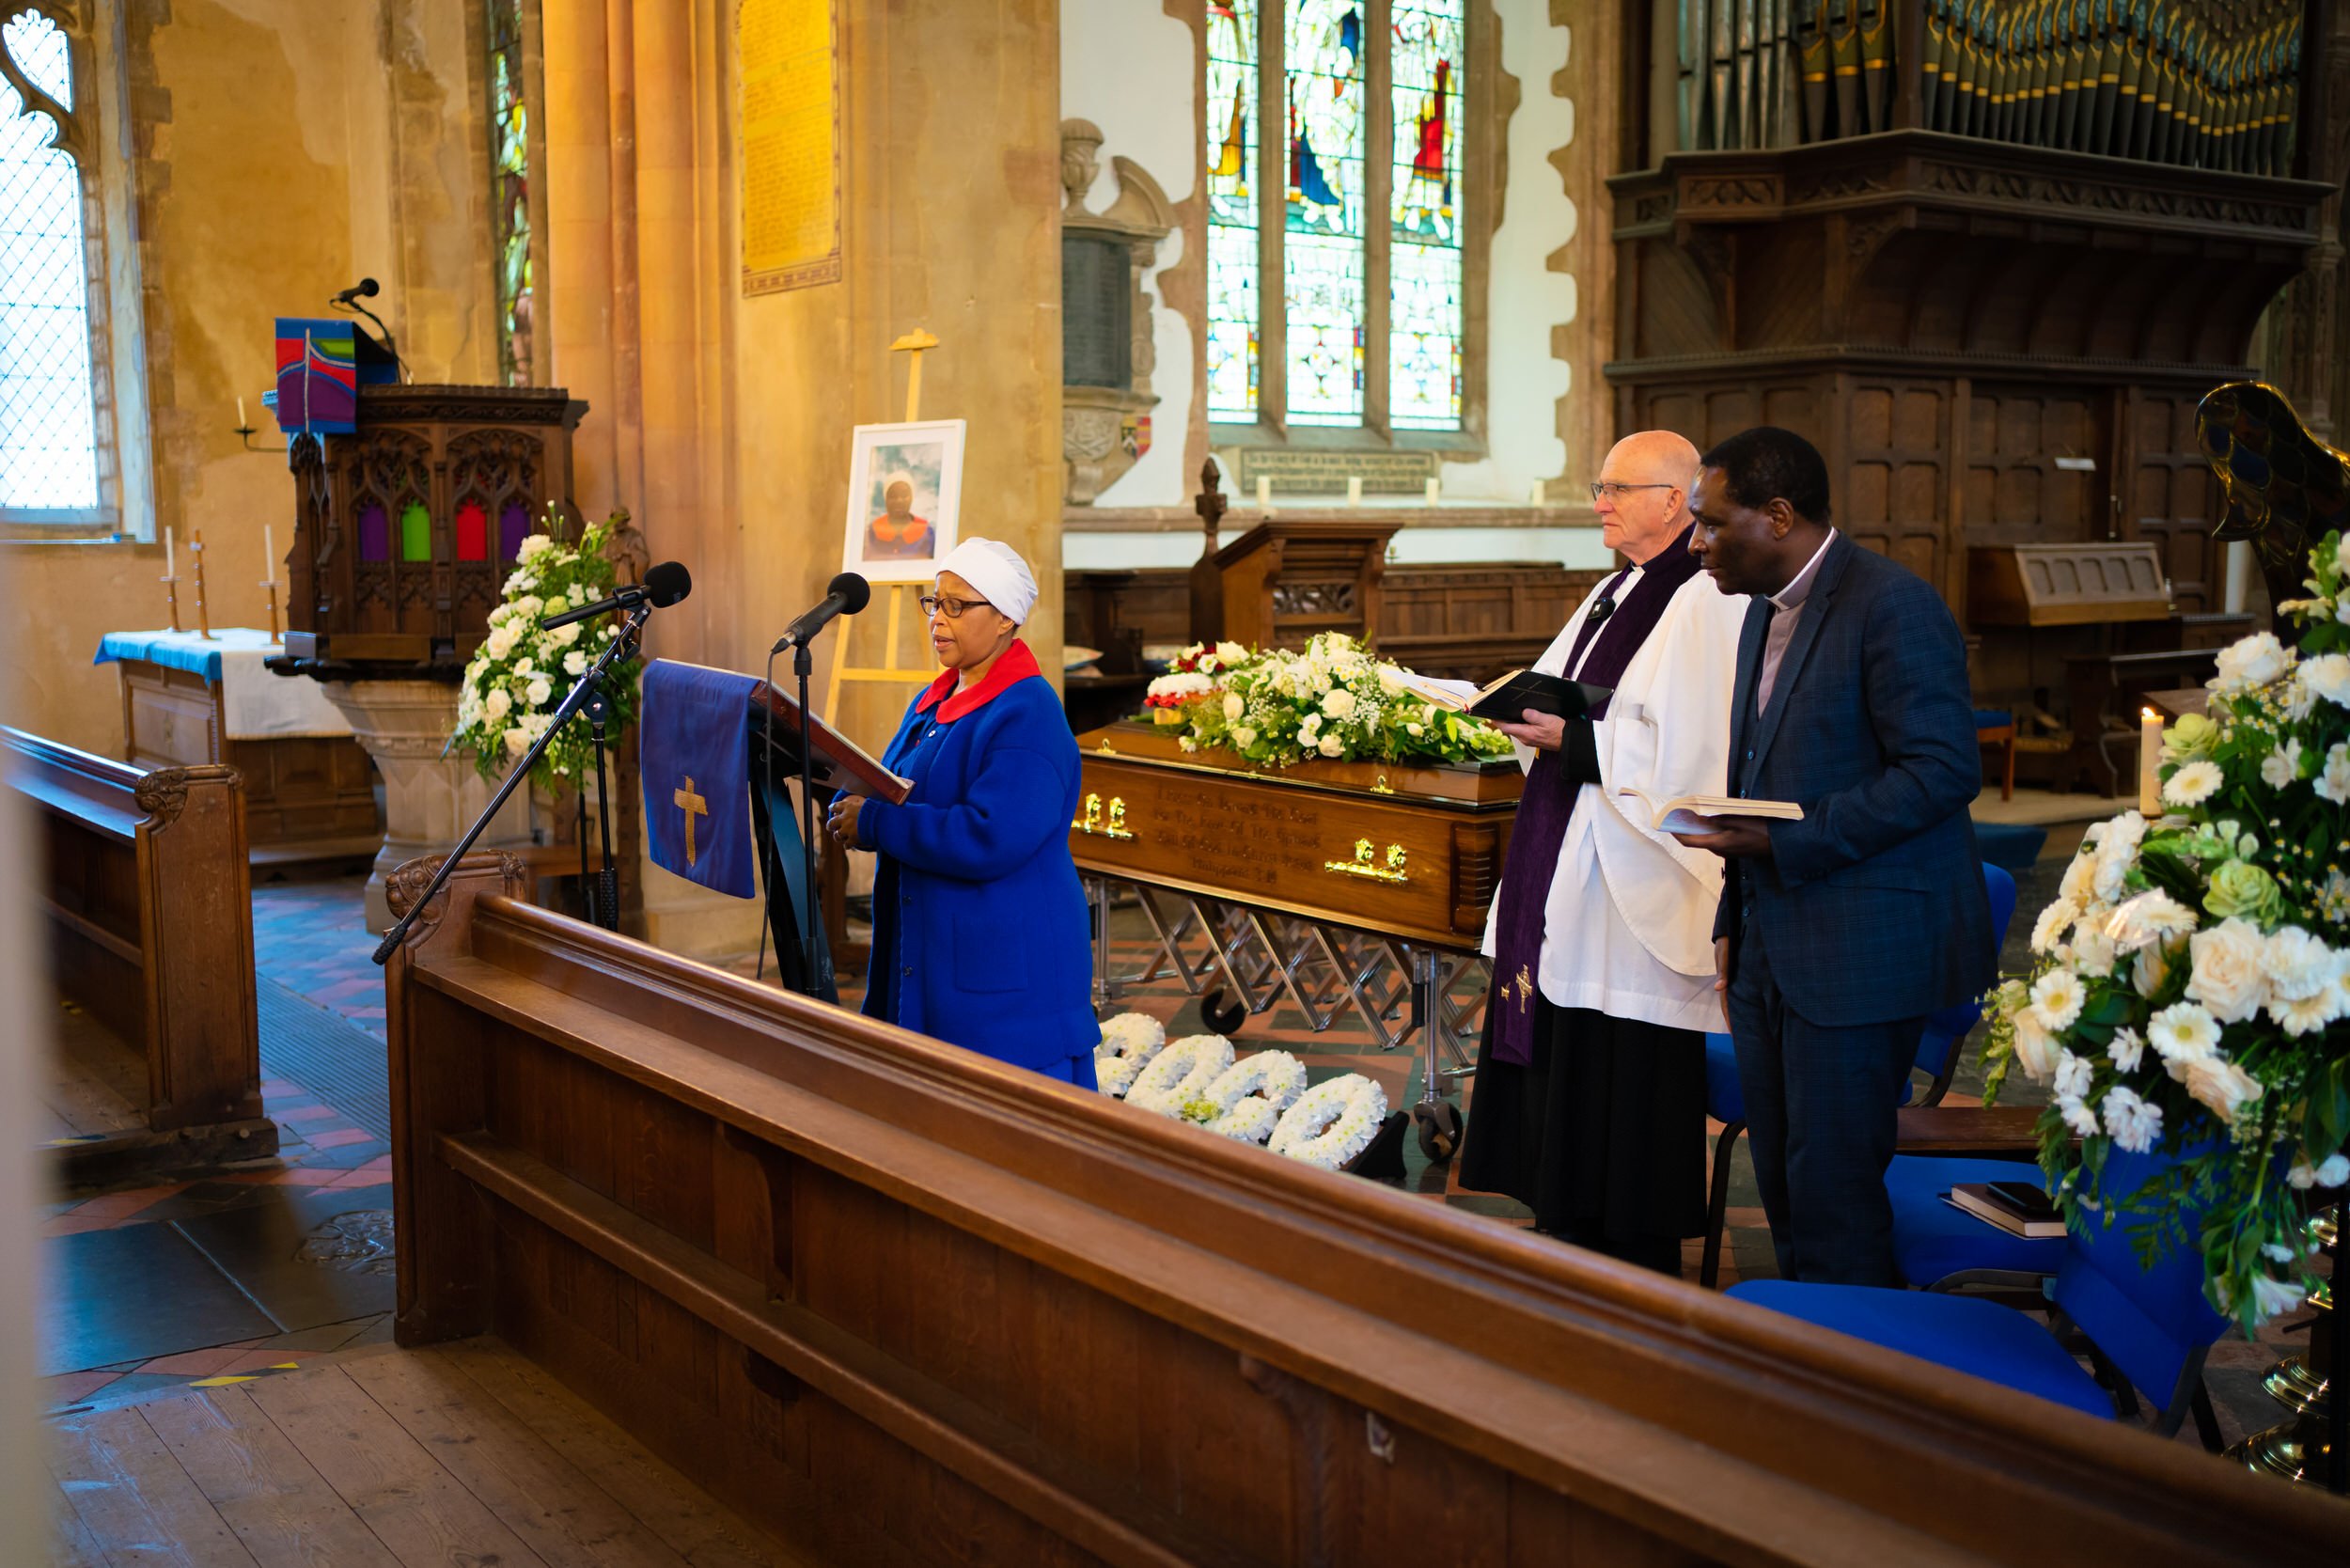 Hingham cemetry Funeral Streaming in Norwich